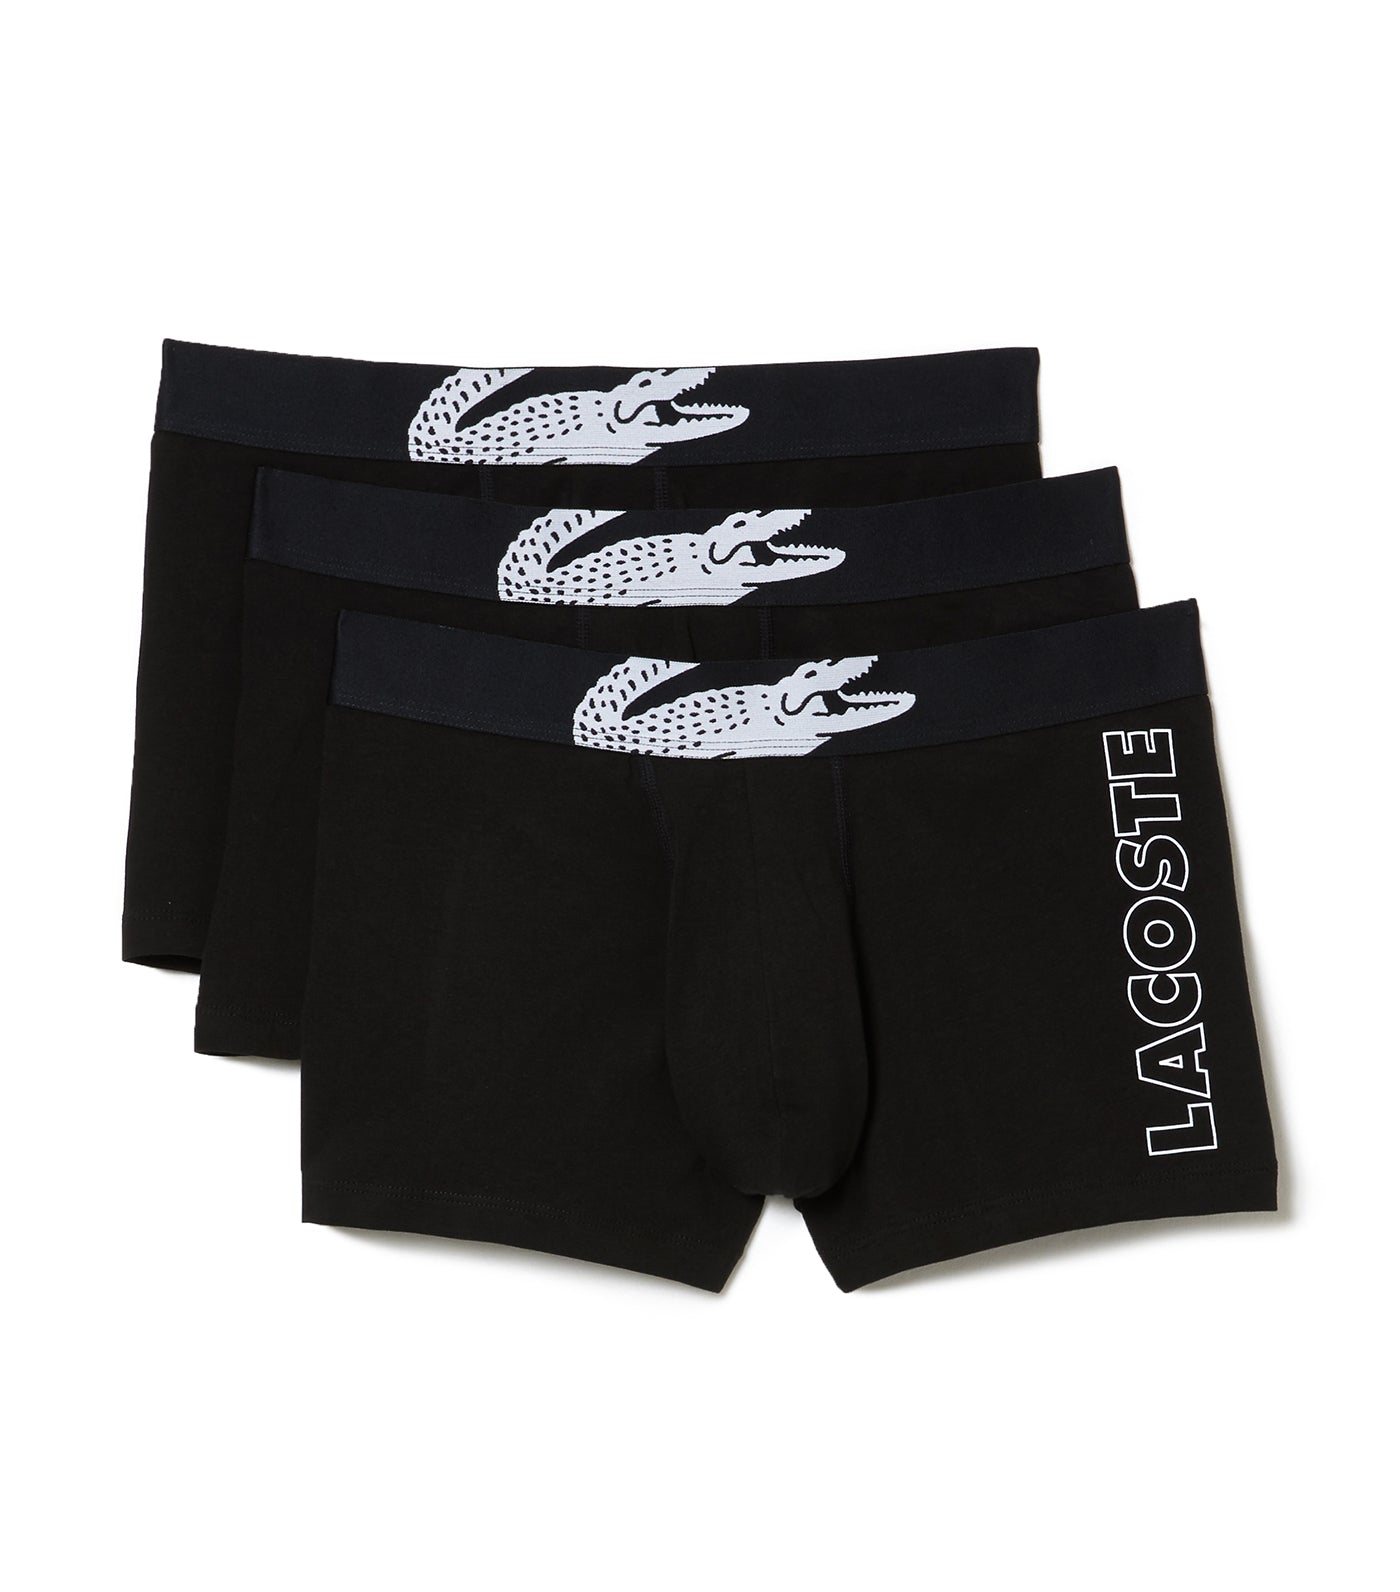 Lacoste Men's Lacoste Crocodile Print Trunk Three-Pack Black